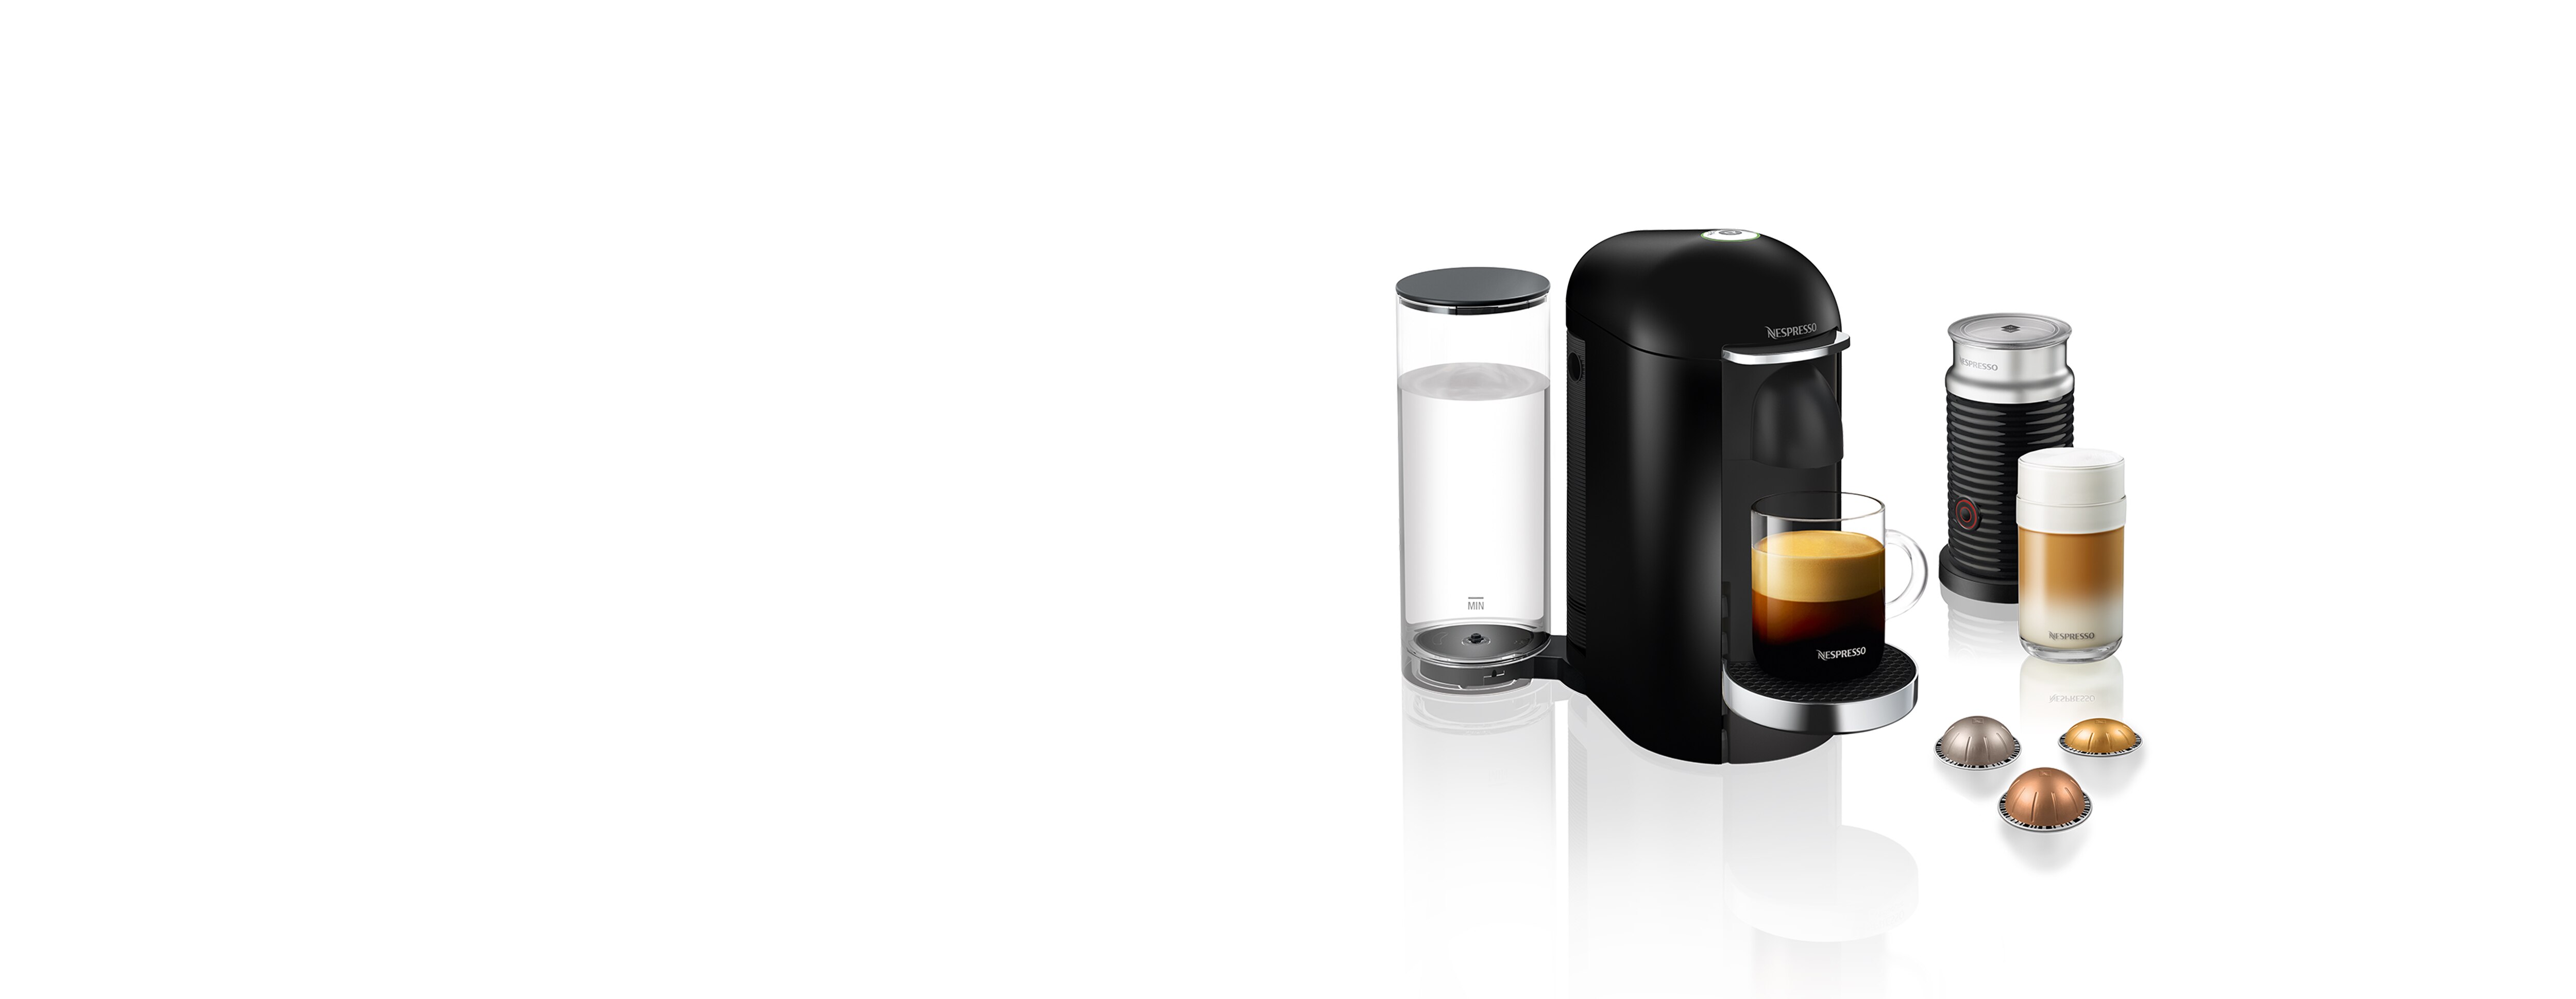 Renewed Chrome with Aeroccino3 Milk Frother Nespresso Vertuo Coffee and Espresso Maker 